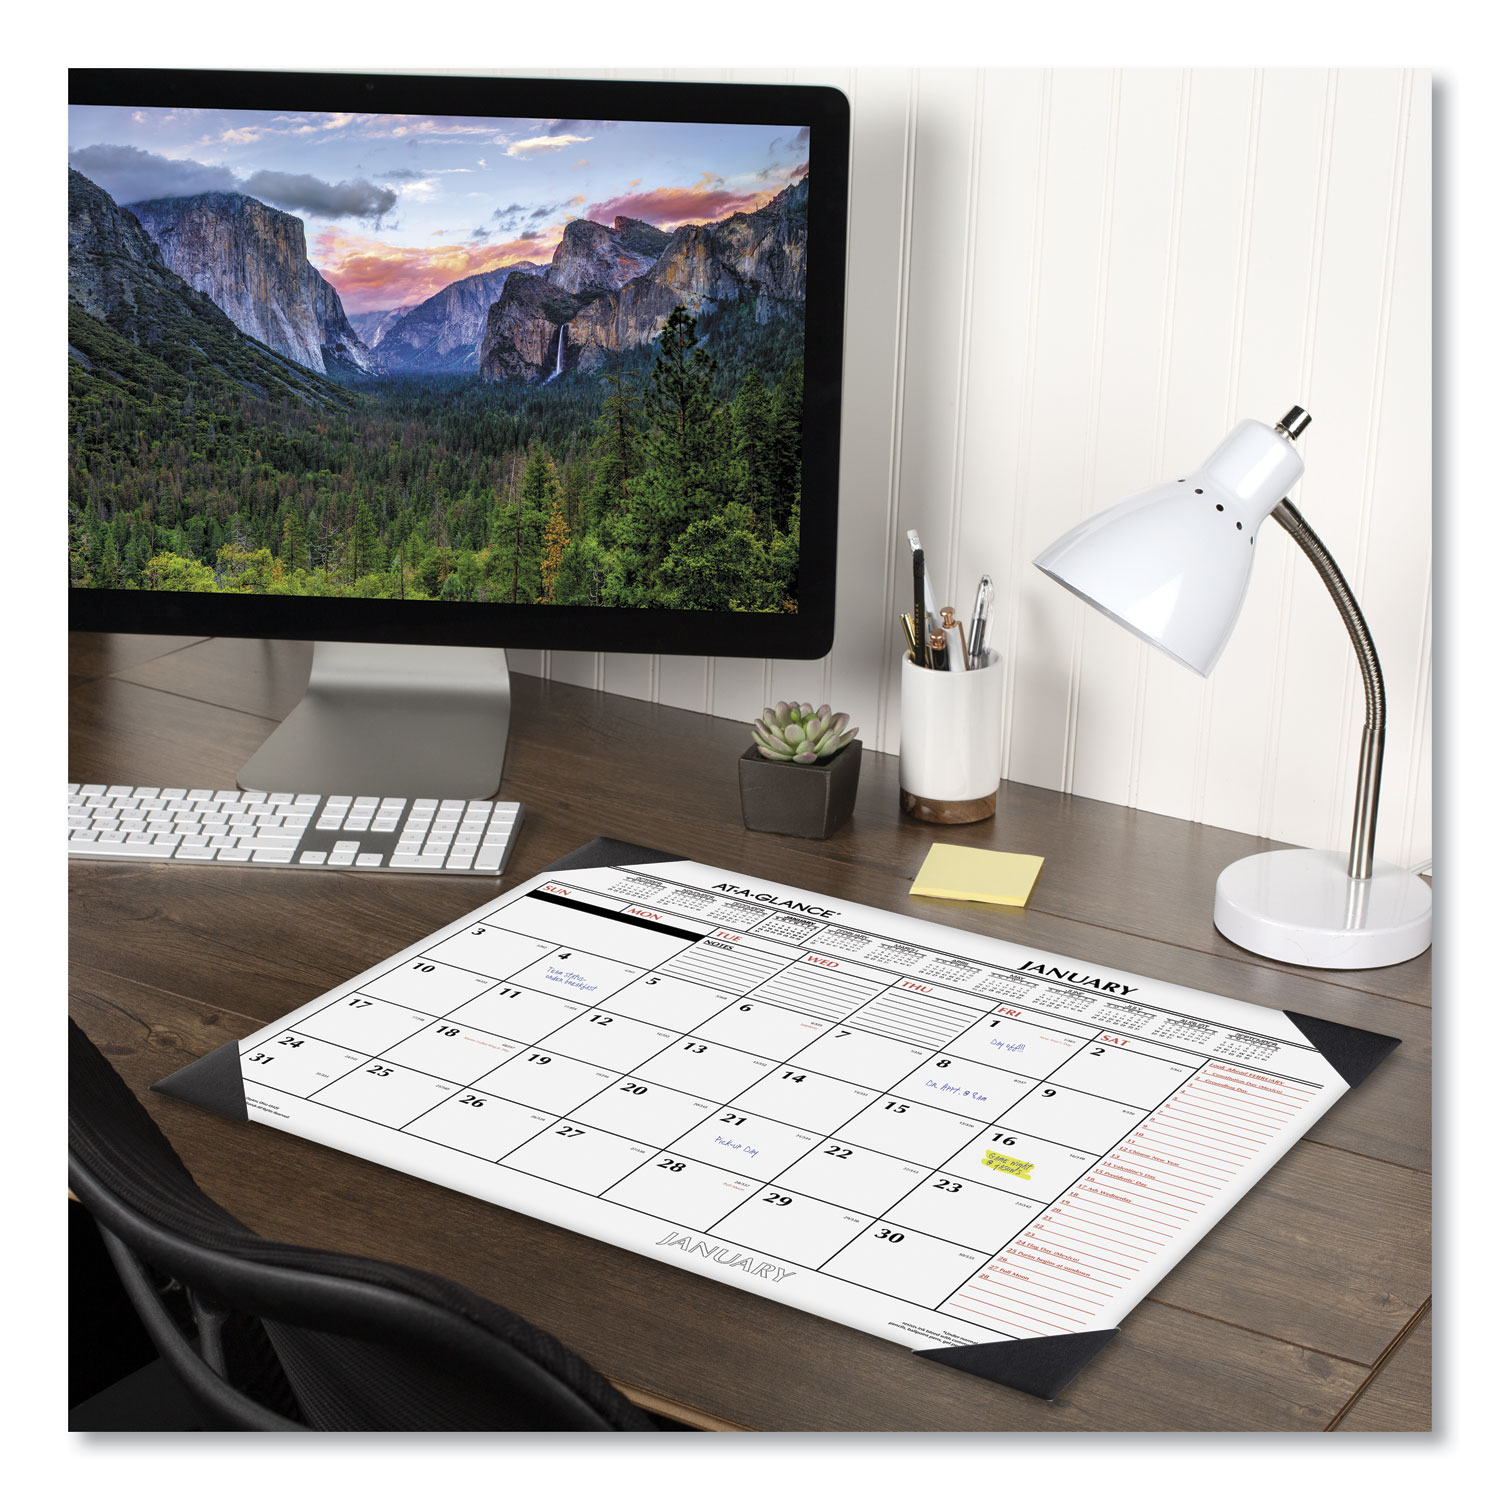 weekday desk blotter calendar